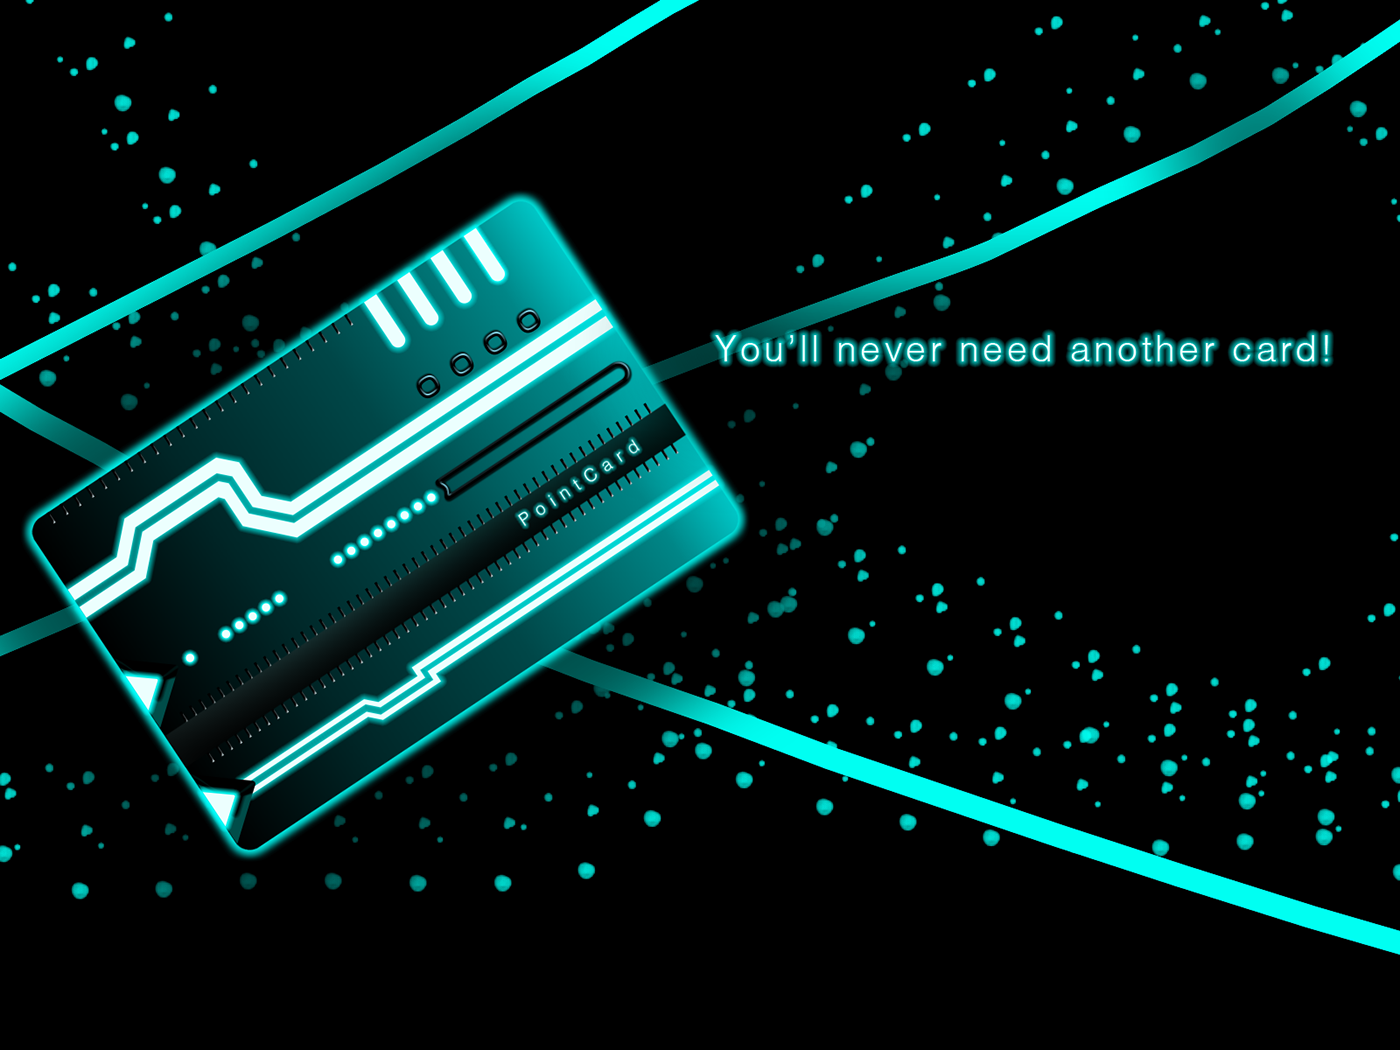 ads Advertising  card credit card Cyberpunk future glow neon Technology UI